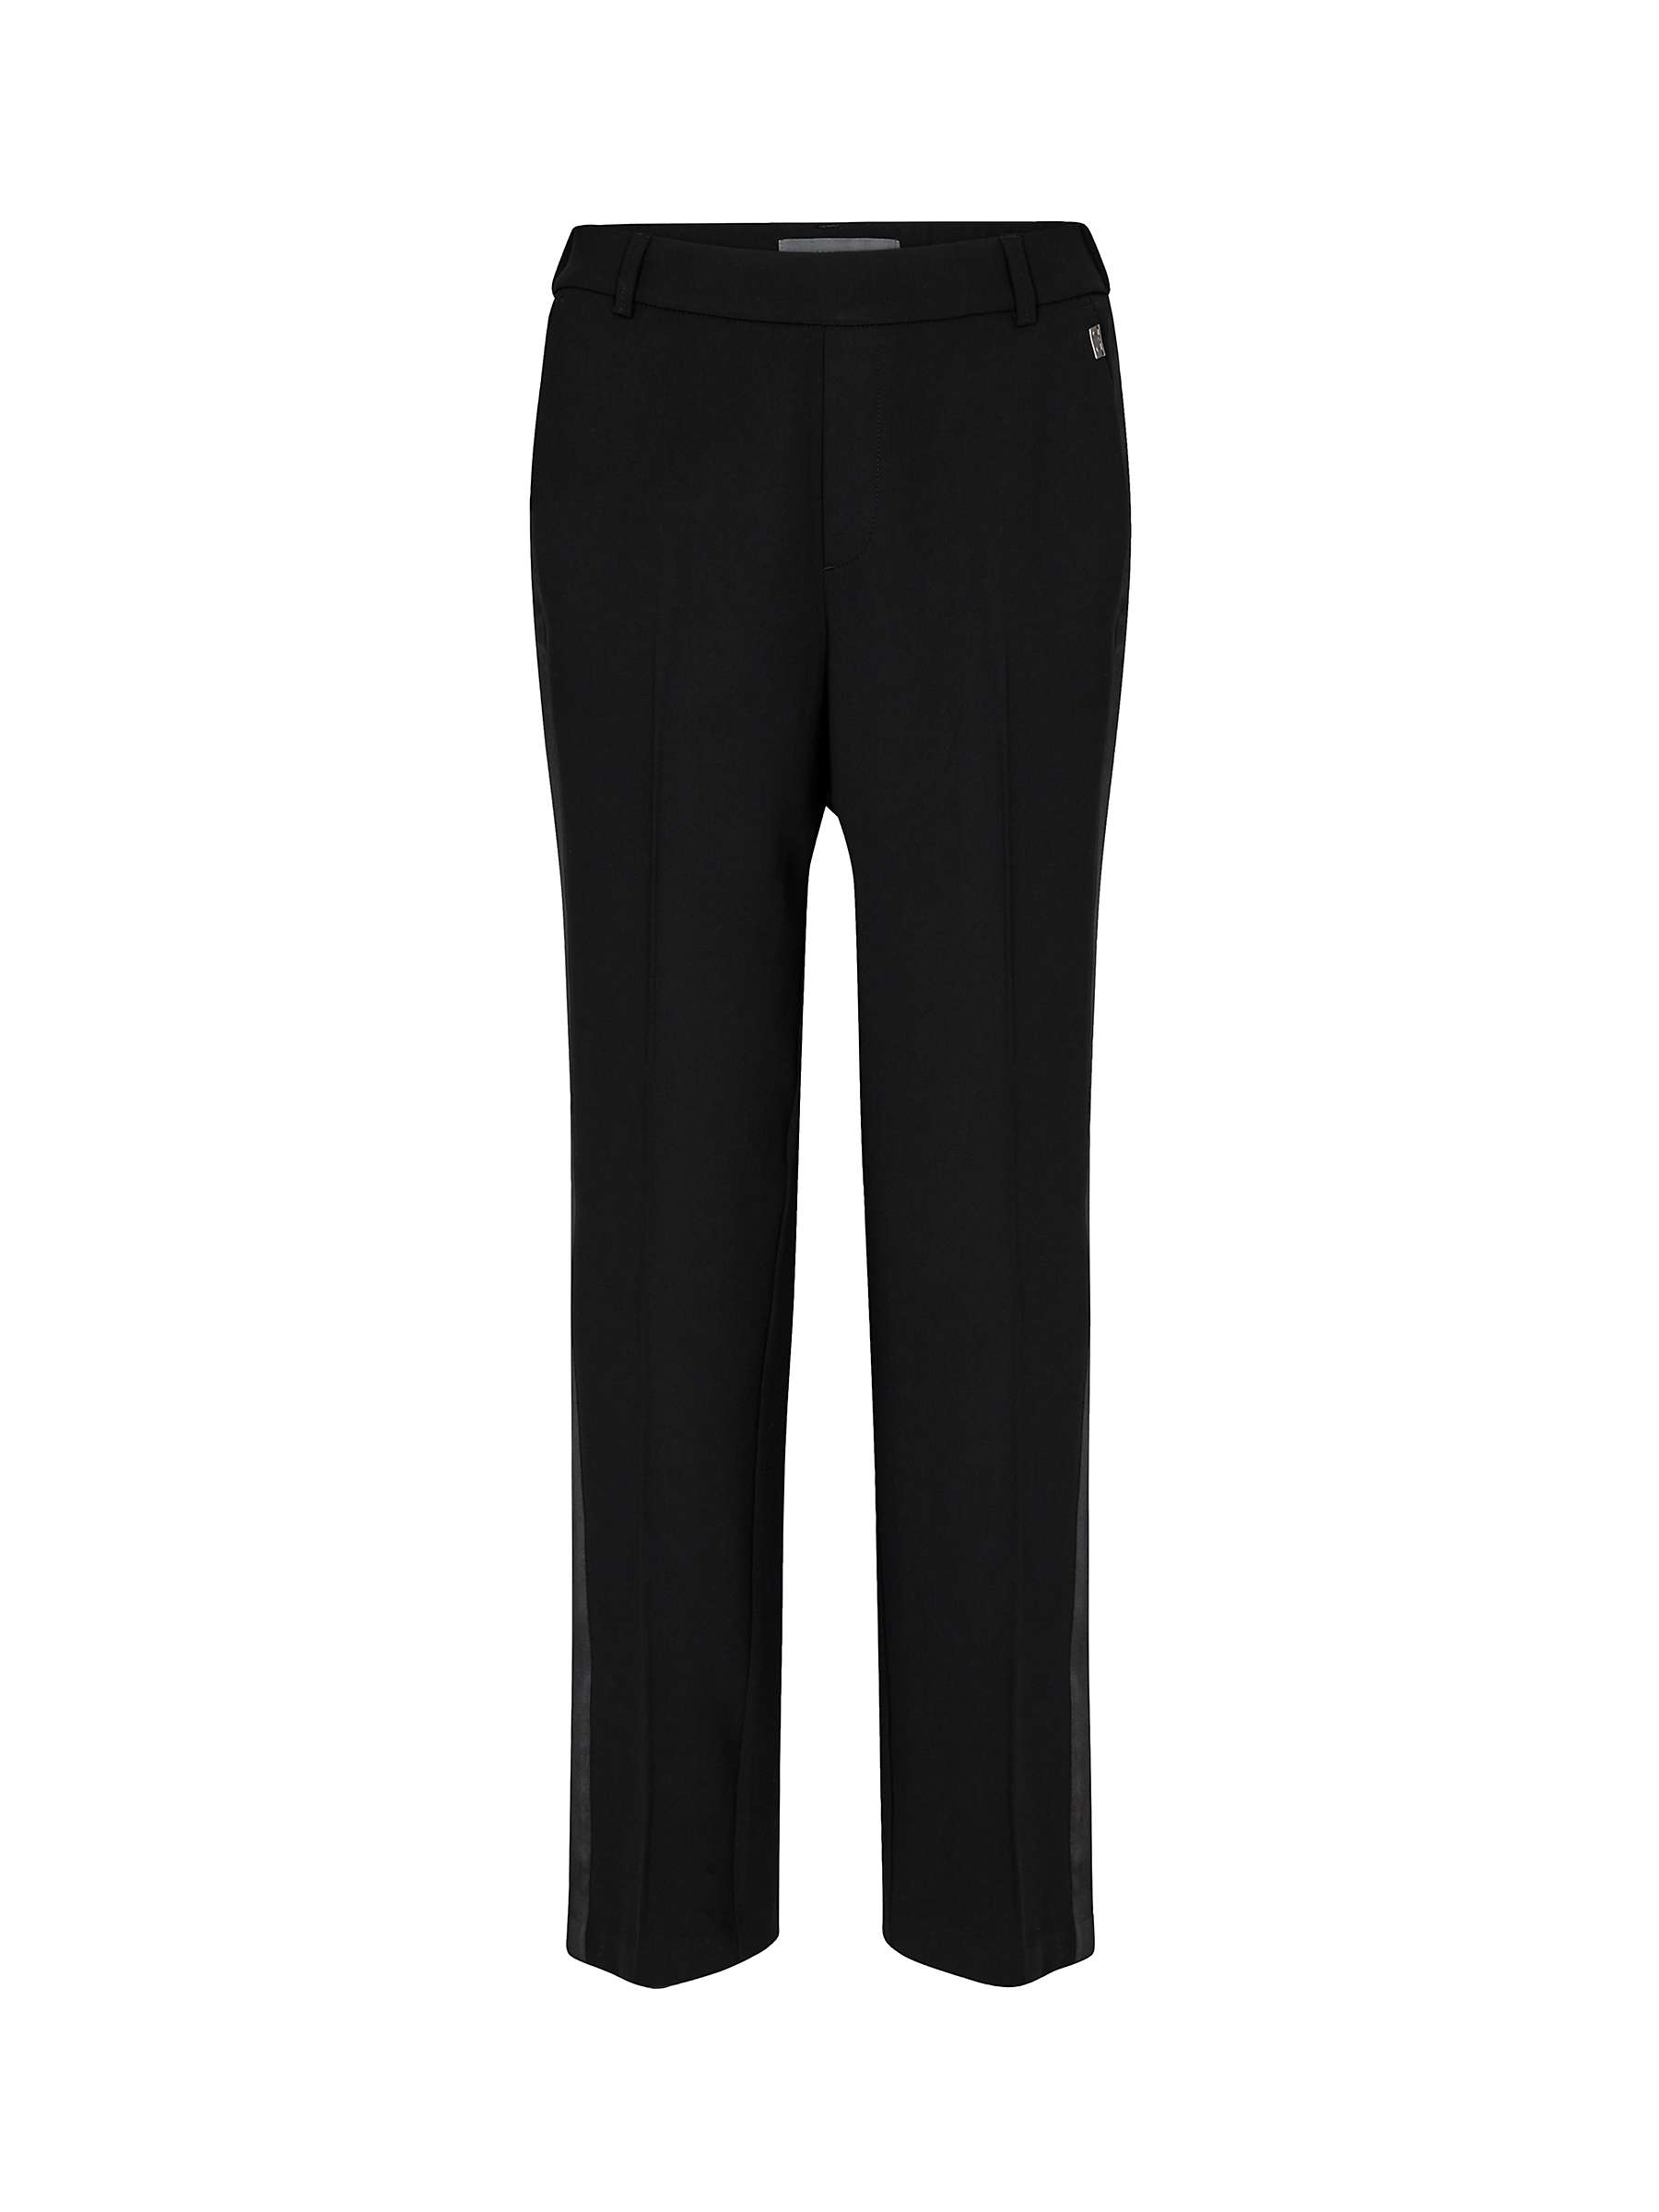 MOS MOSH Bai Leia Soft Pull On Trousers, Black at John Lewis & Partners